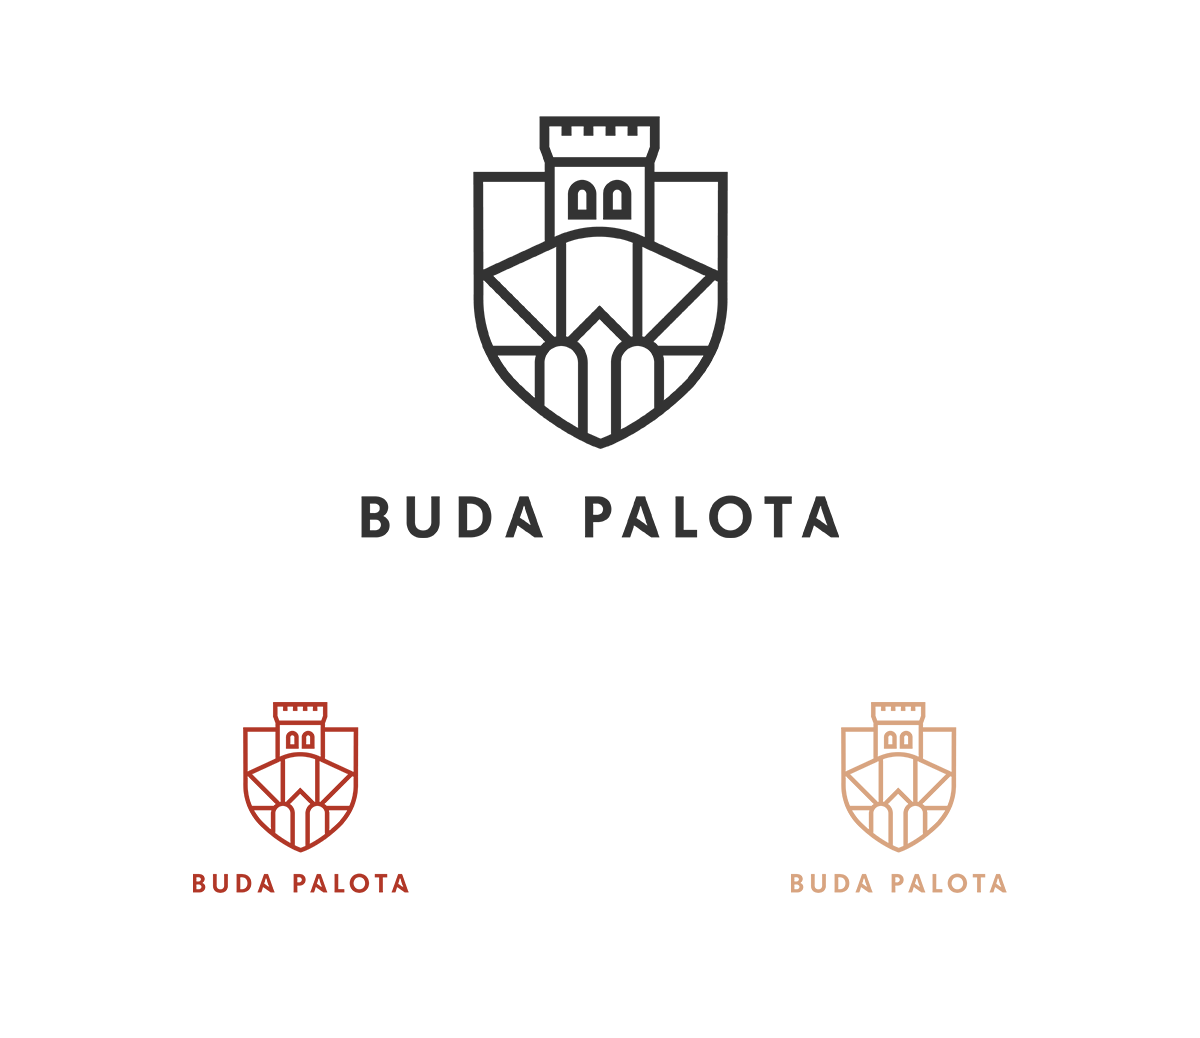 Buda Paloto logo in three colors